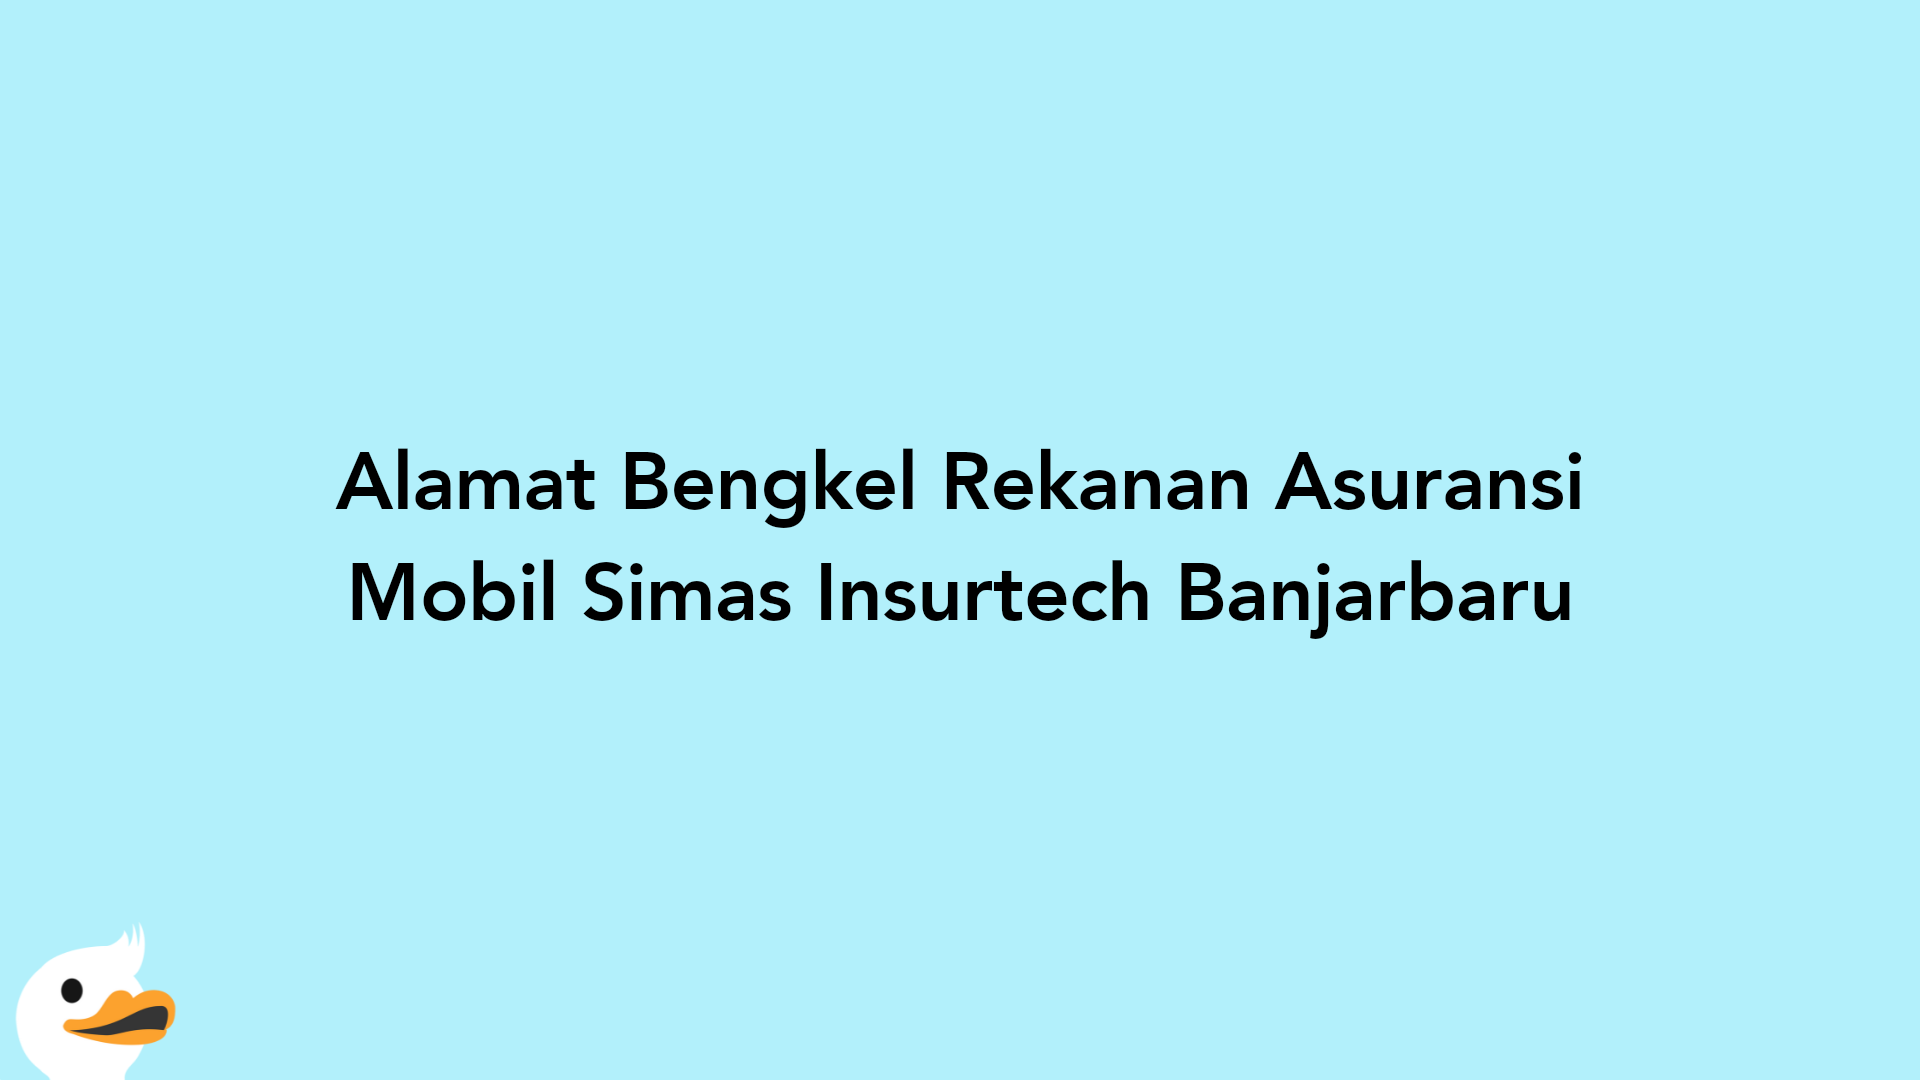 Alamat Bengkel Rekanan Asuransi Mobil Simas Insurtech Banjarbaru